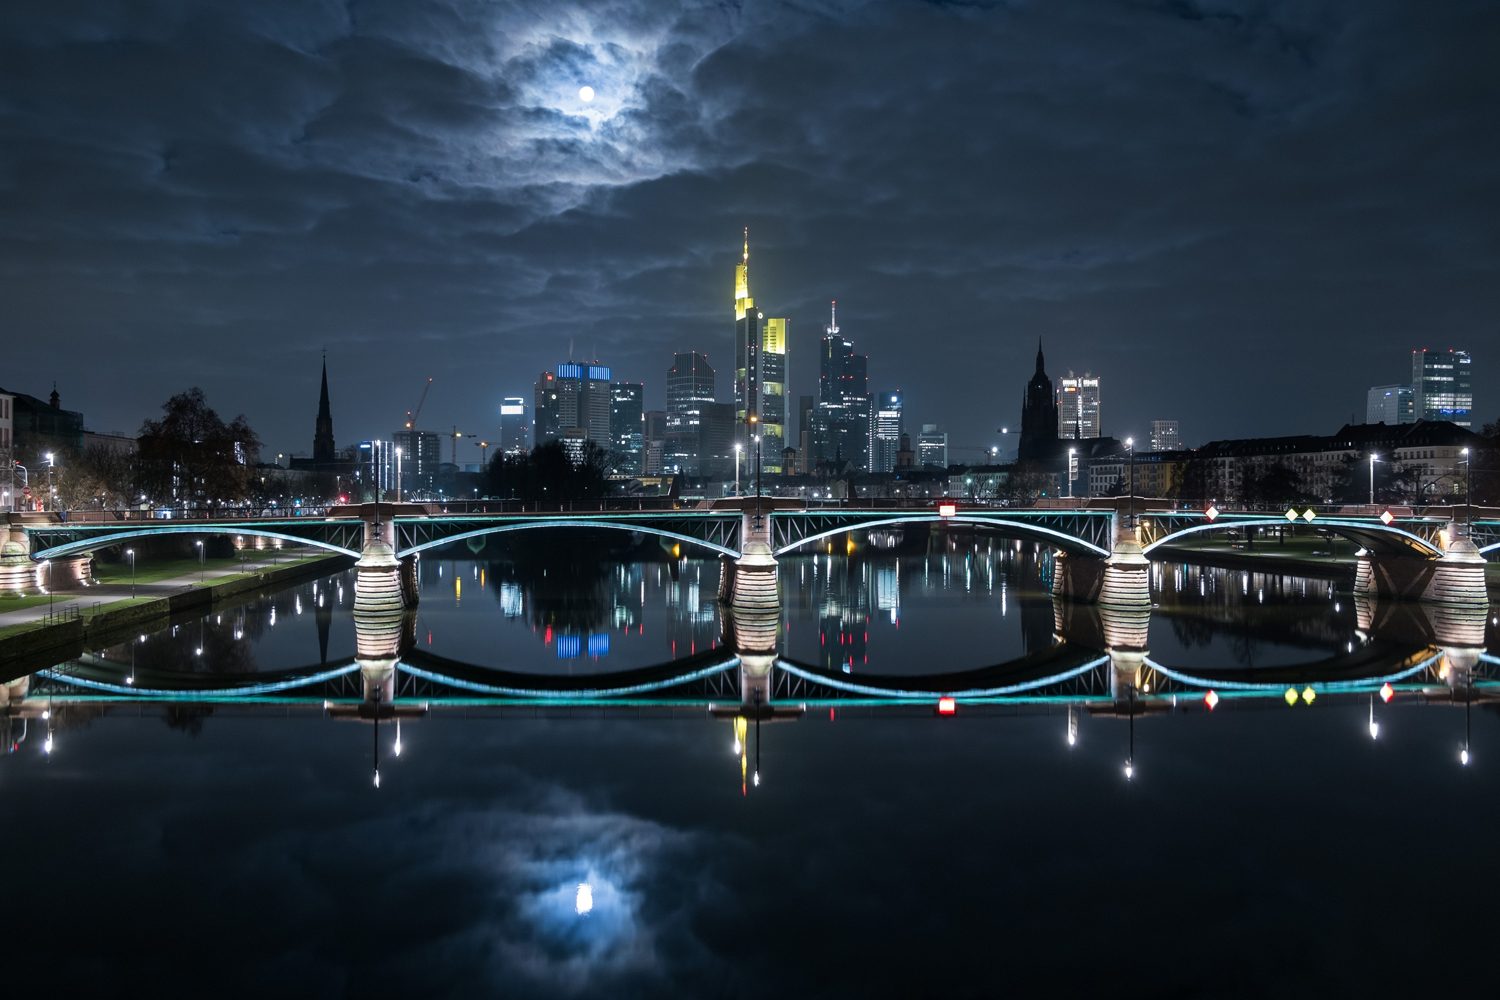 Se Frankfurt at Full Moon hos Picment.dk